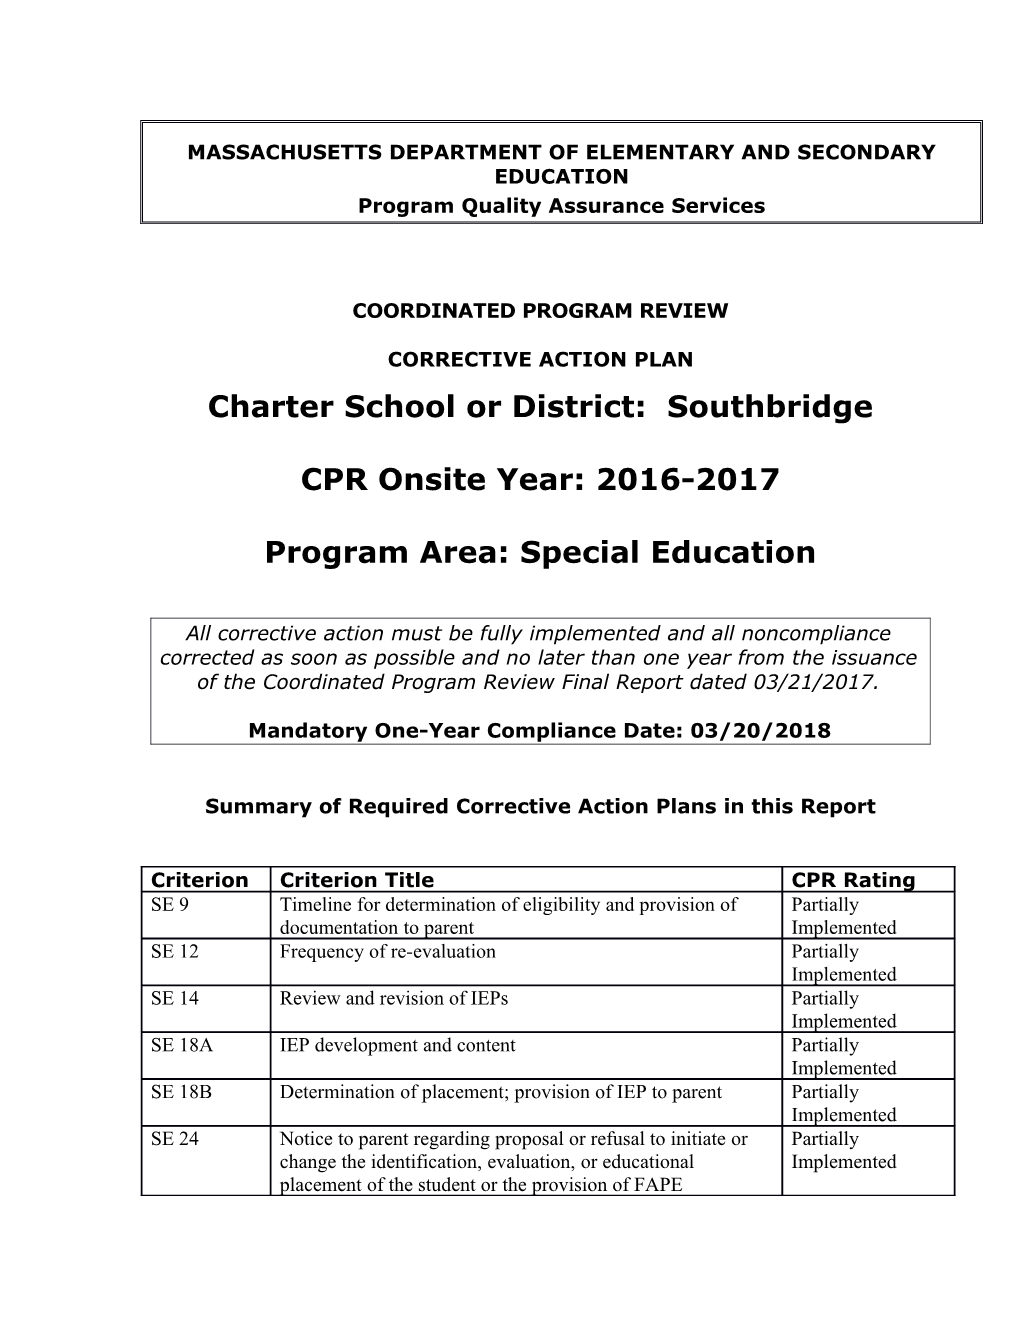 Southbridge Public Schools CAP 2017